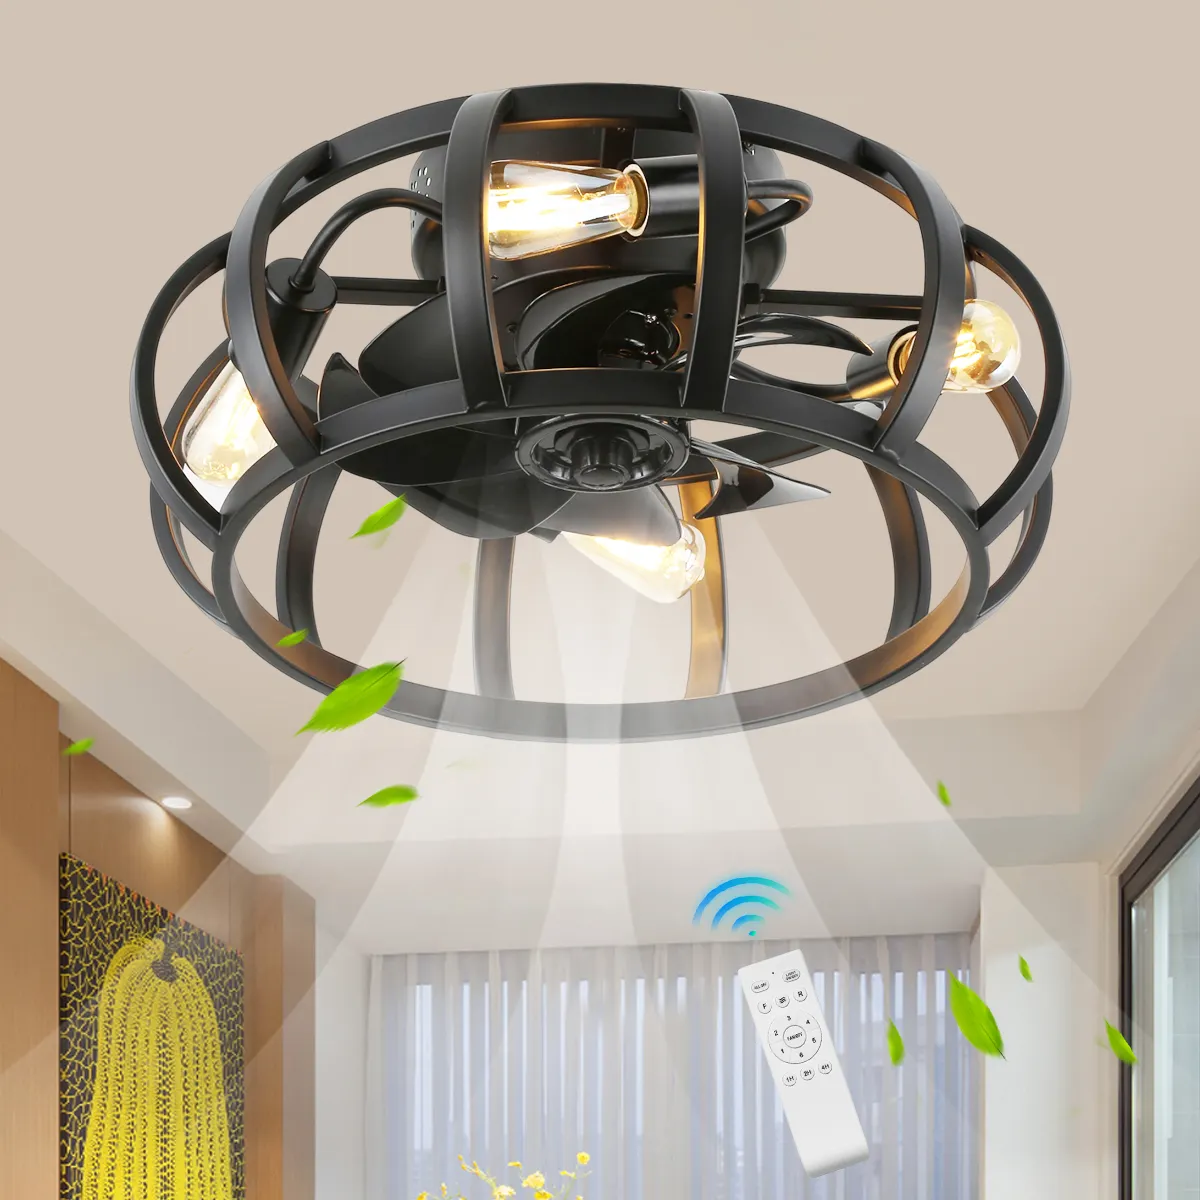 SLYNN Indoor Energy Saving Dekorative Beleuchtung LED Intelligente Decken ventilator lampe